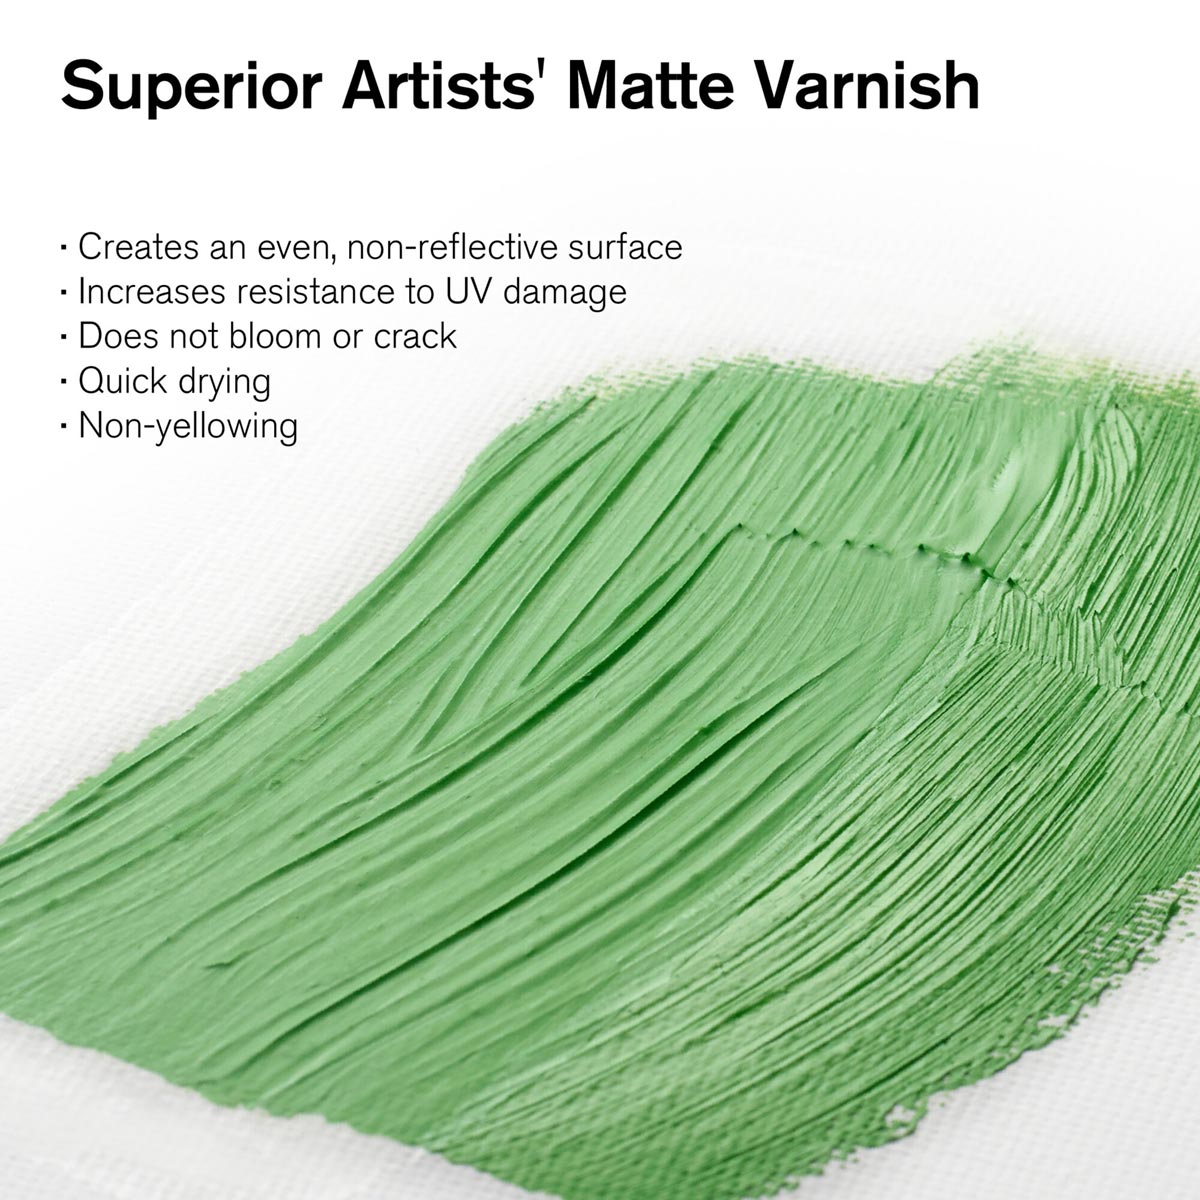 Winsor and Newton - Artists' Matt Varnish - 250ml